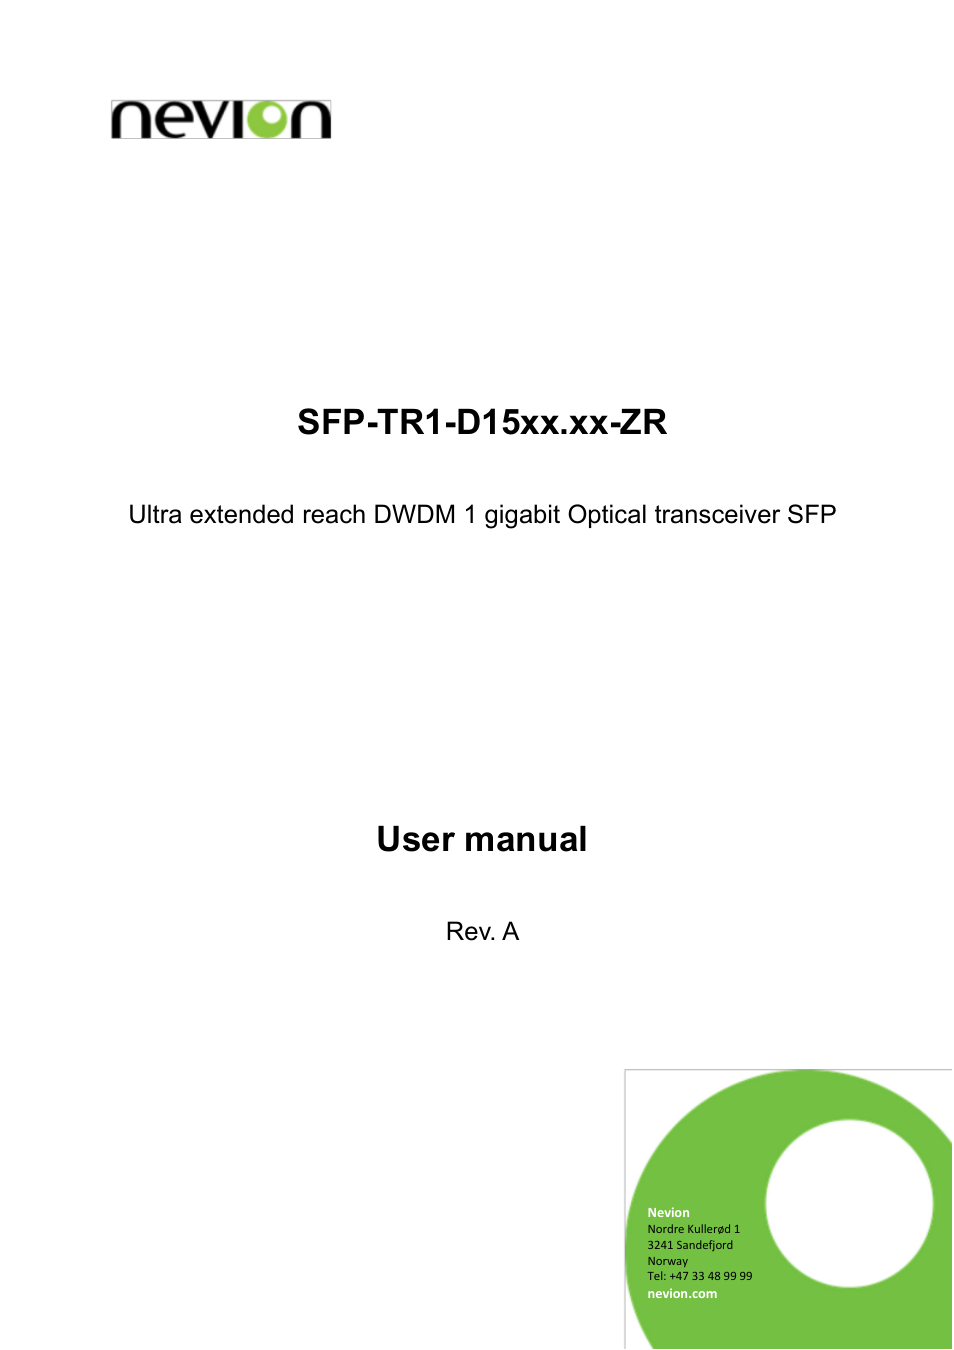 SFP-TR1-D15xx.xx-ER